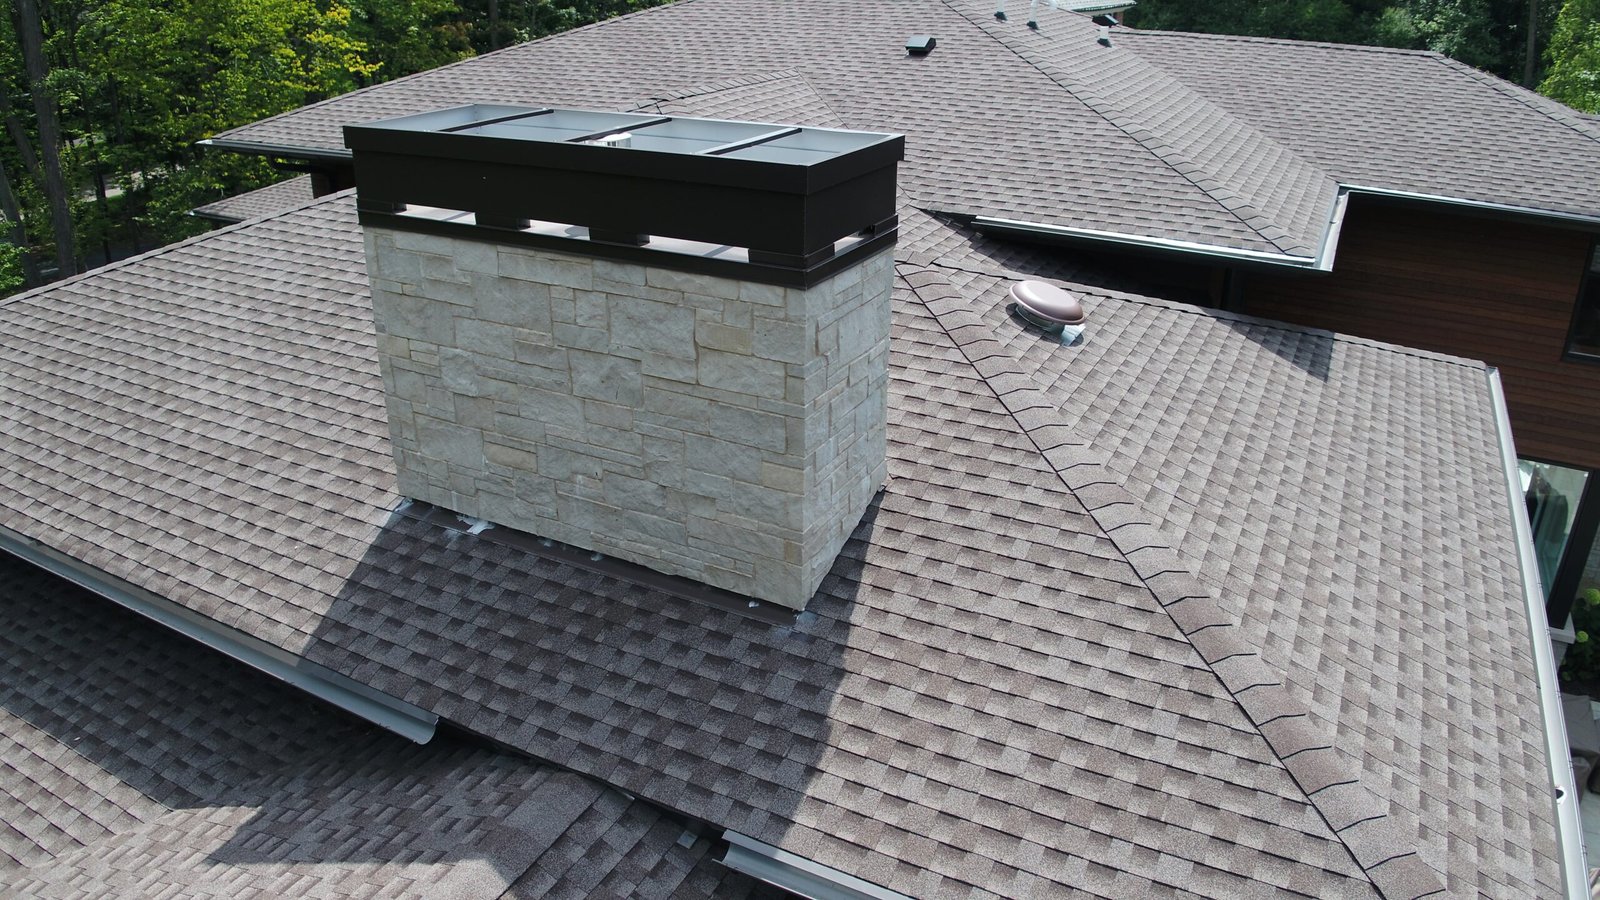 Asphalt Shingle Roof by AB Edward Enterprises, Inc